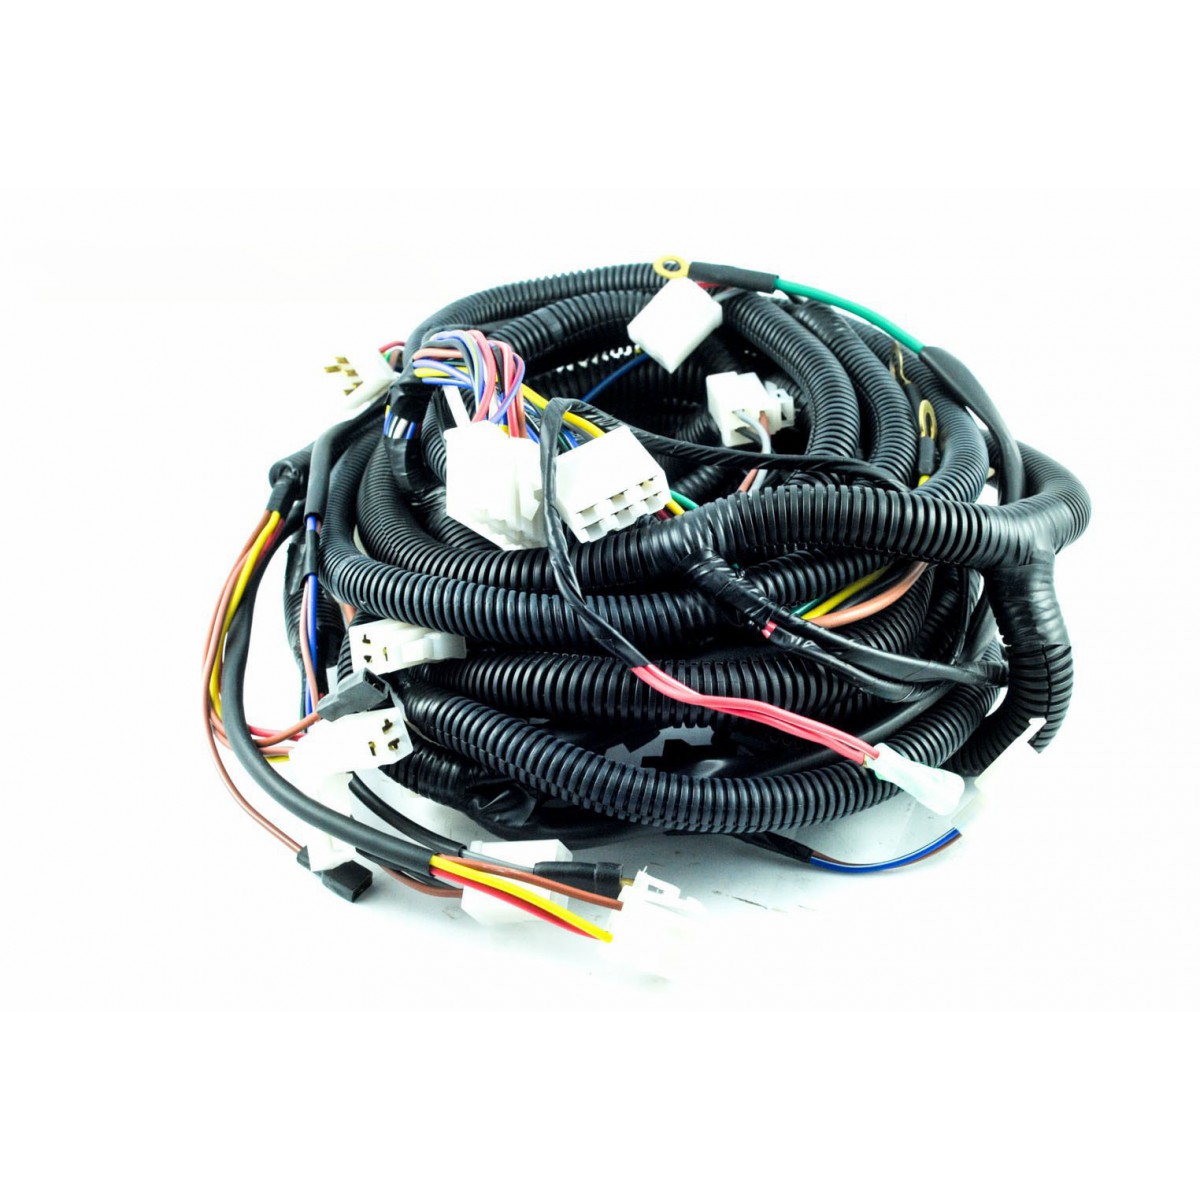 Mitsubishi VST wiring harness